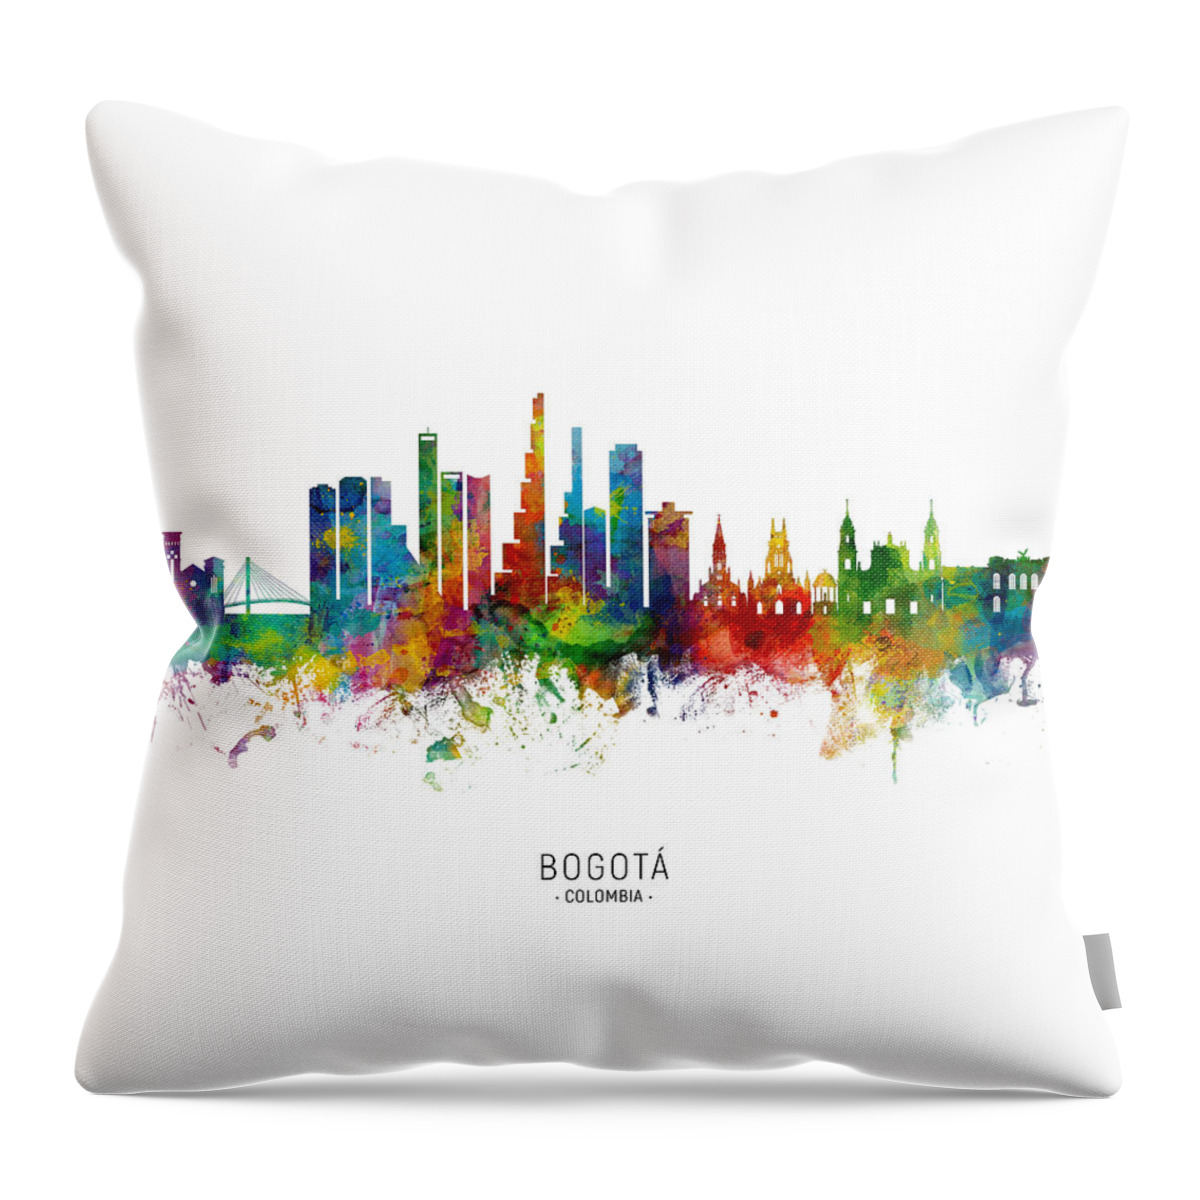 Bogotá Throw Pillow featuring the digital art Bogota Colombia Skyline by Michael Tompsett